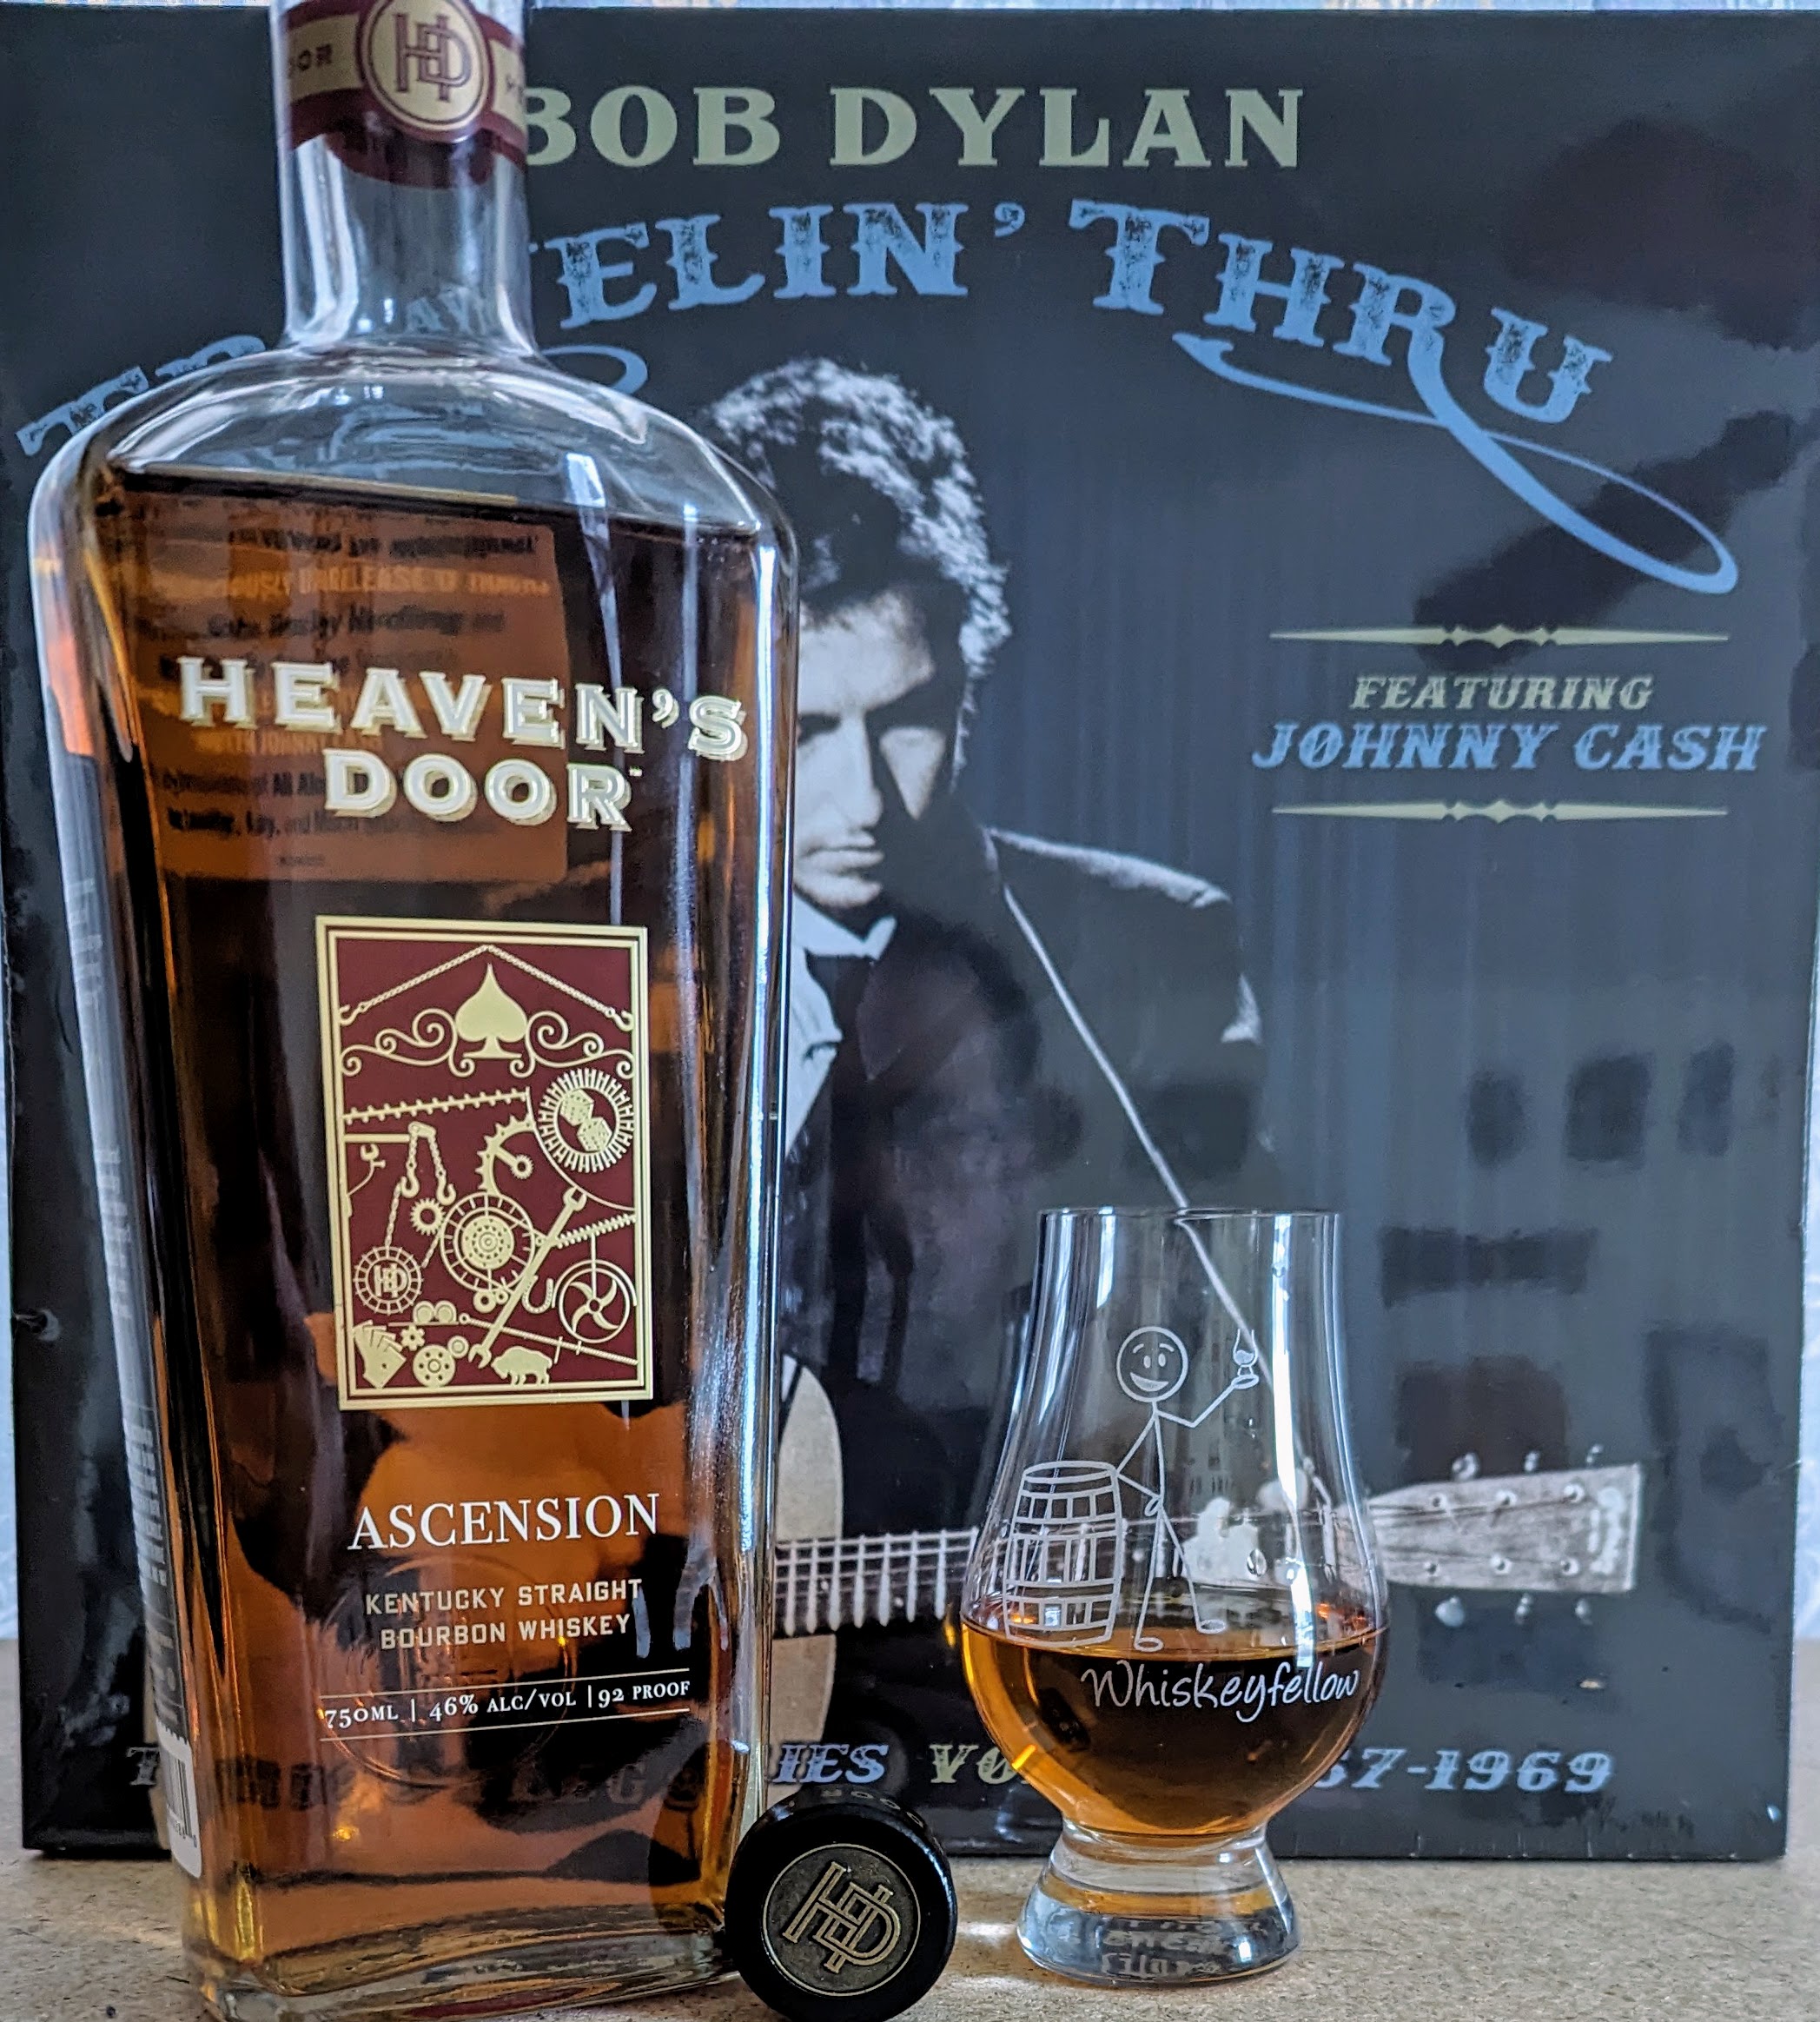 Ascension Kentucky Straight Bourbon Whiskey